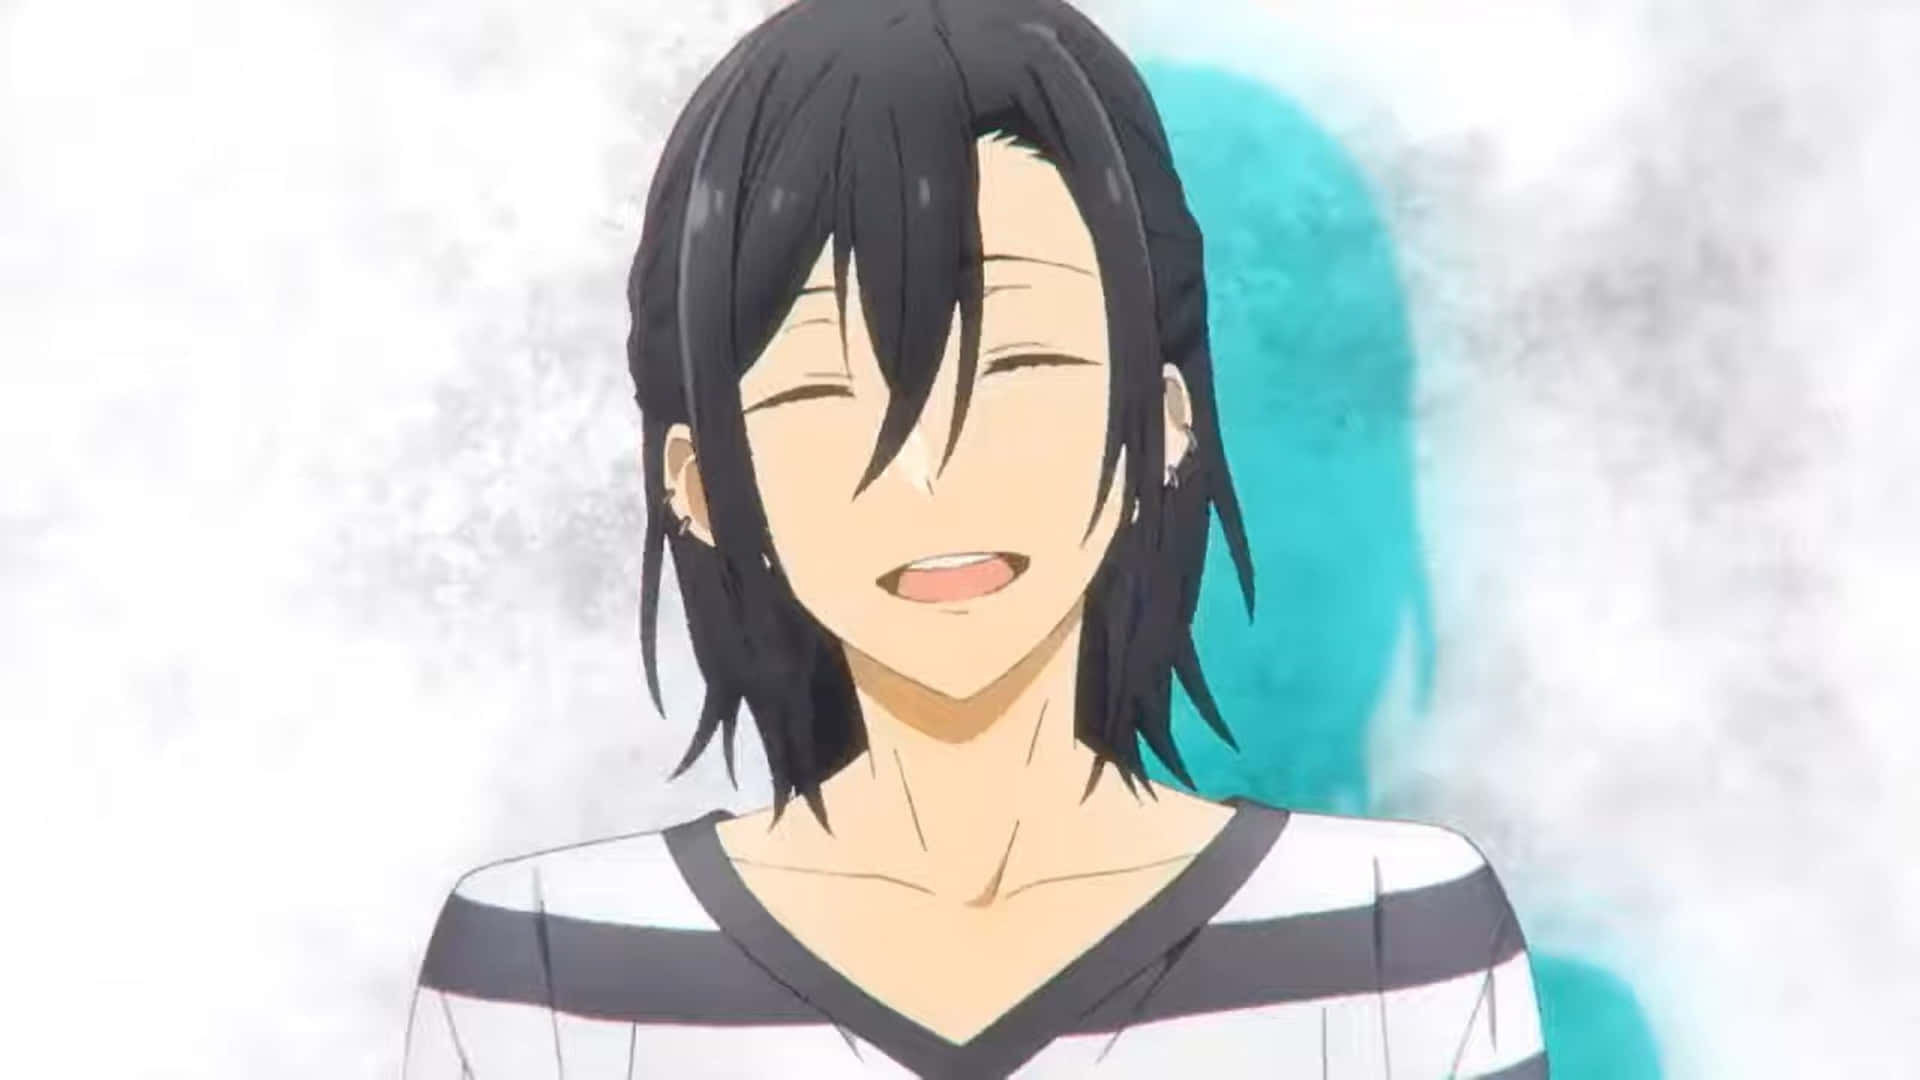 Miyamura Smiling Anime Character Wallpaper